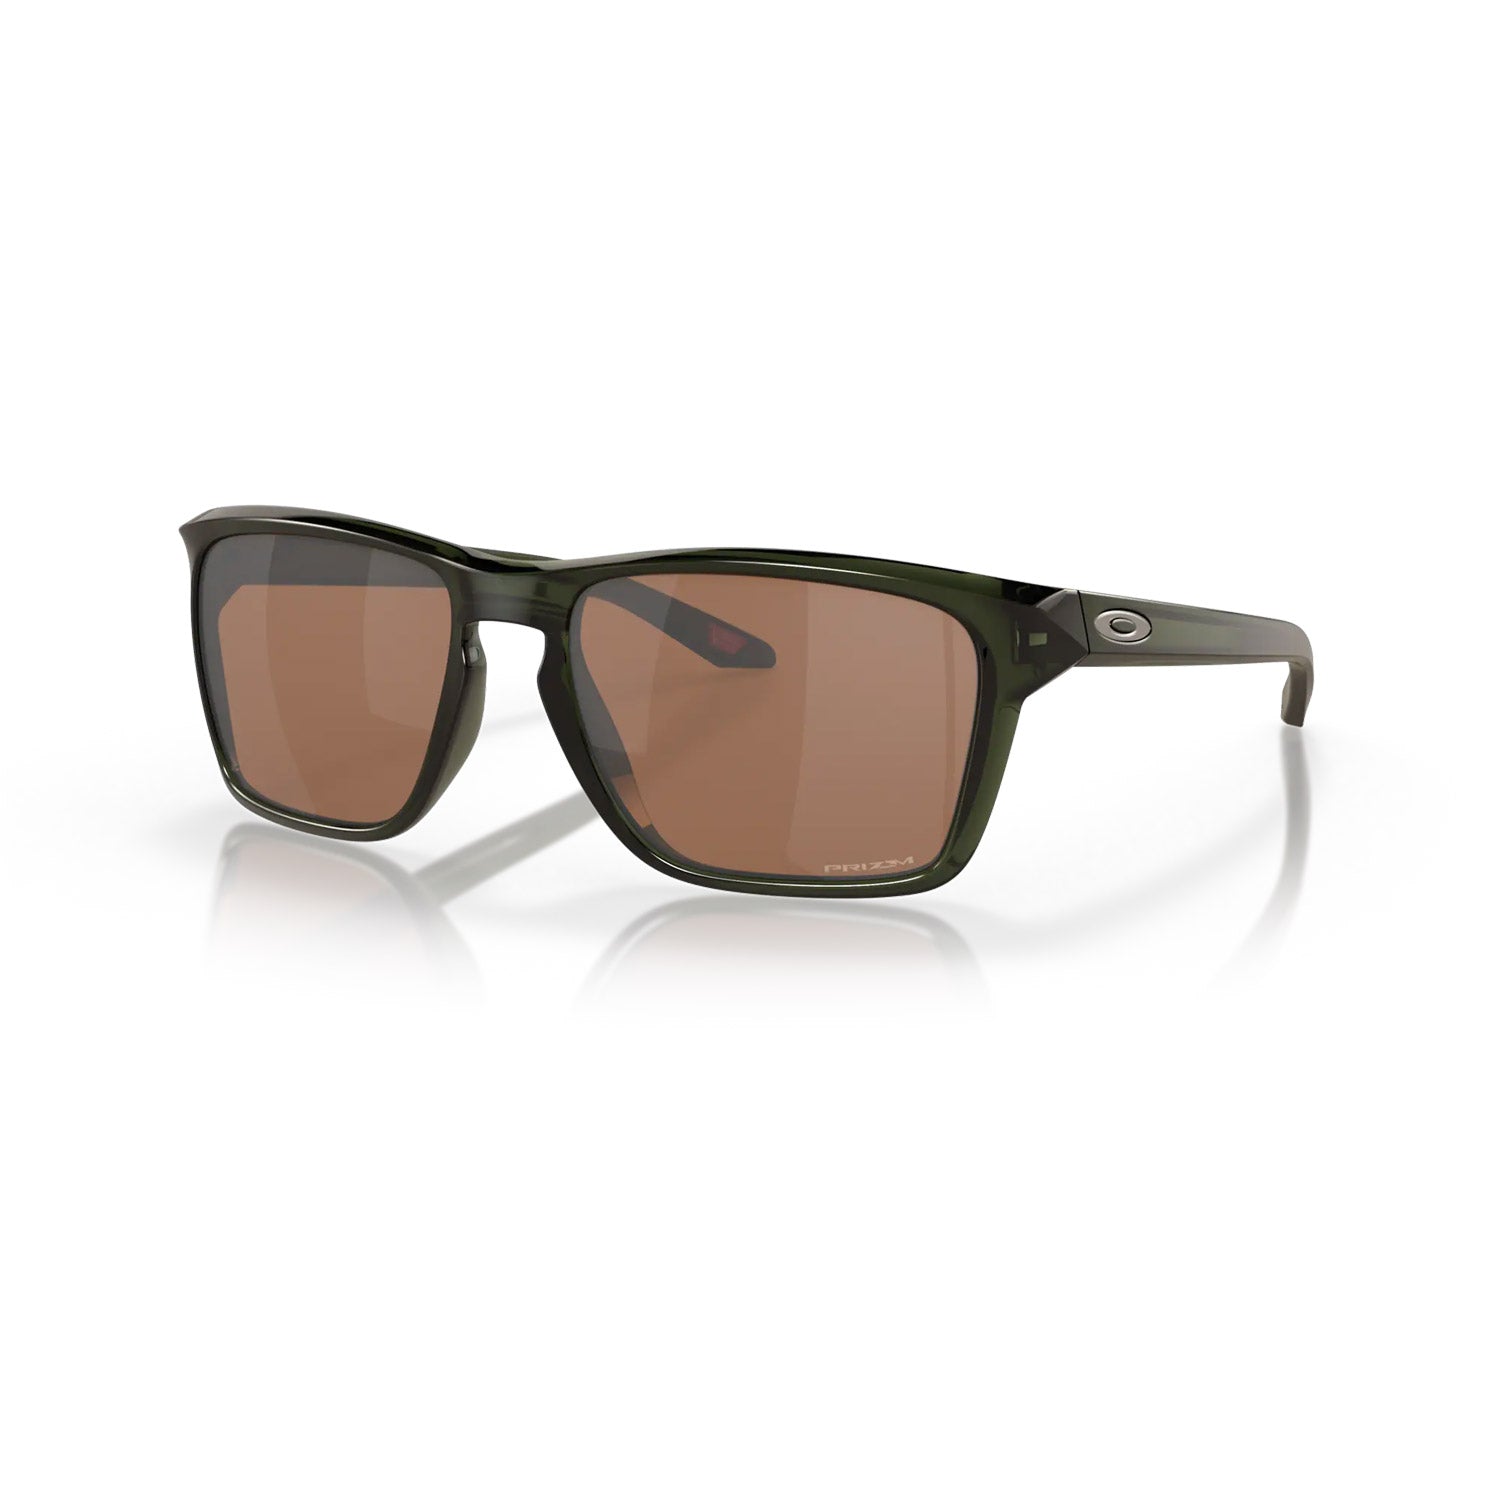 Sylas Sunglasses Olive Ink - Prizm Tungsten Iridium Lens